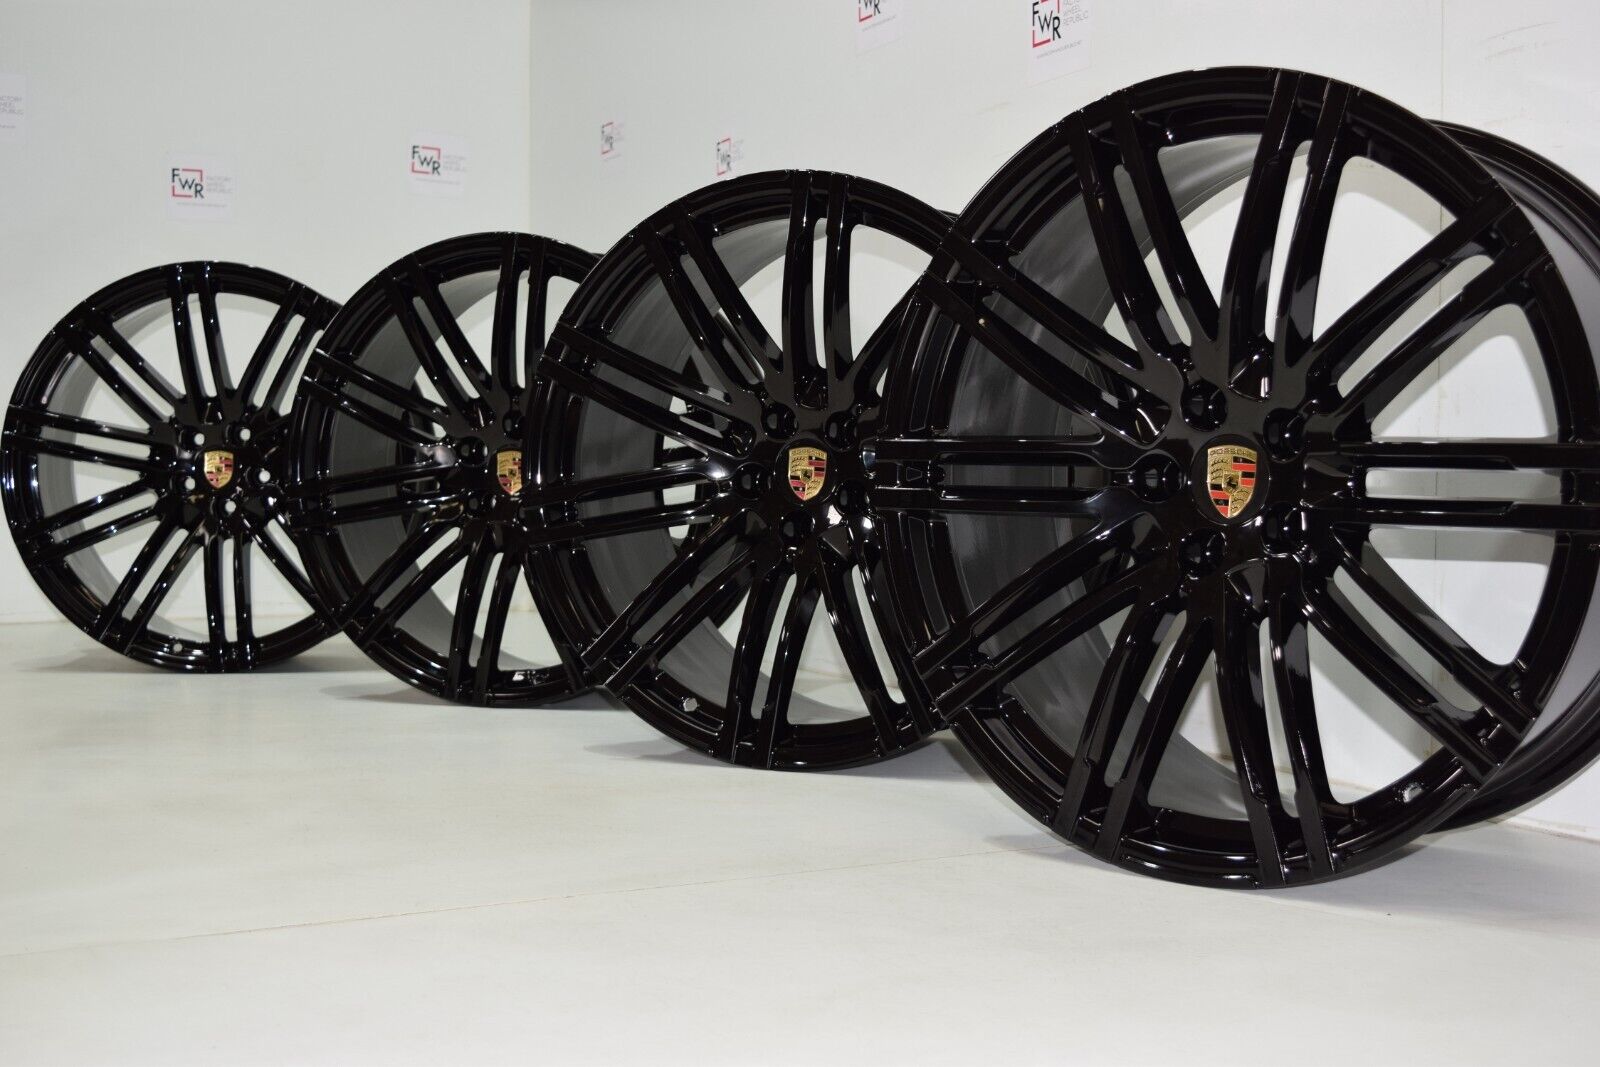 21″ Porsche Macan 21-inch Turbo III Factory OEM Authentic Black wheels rims